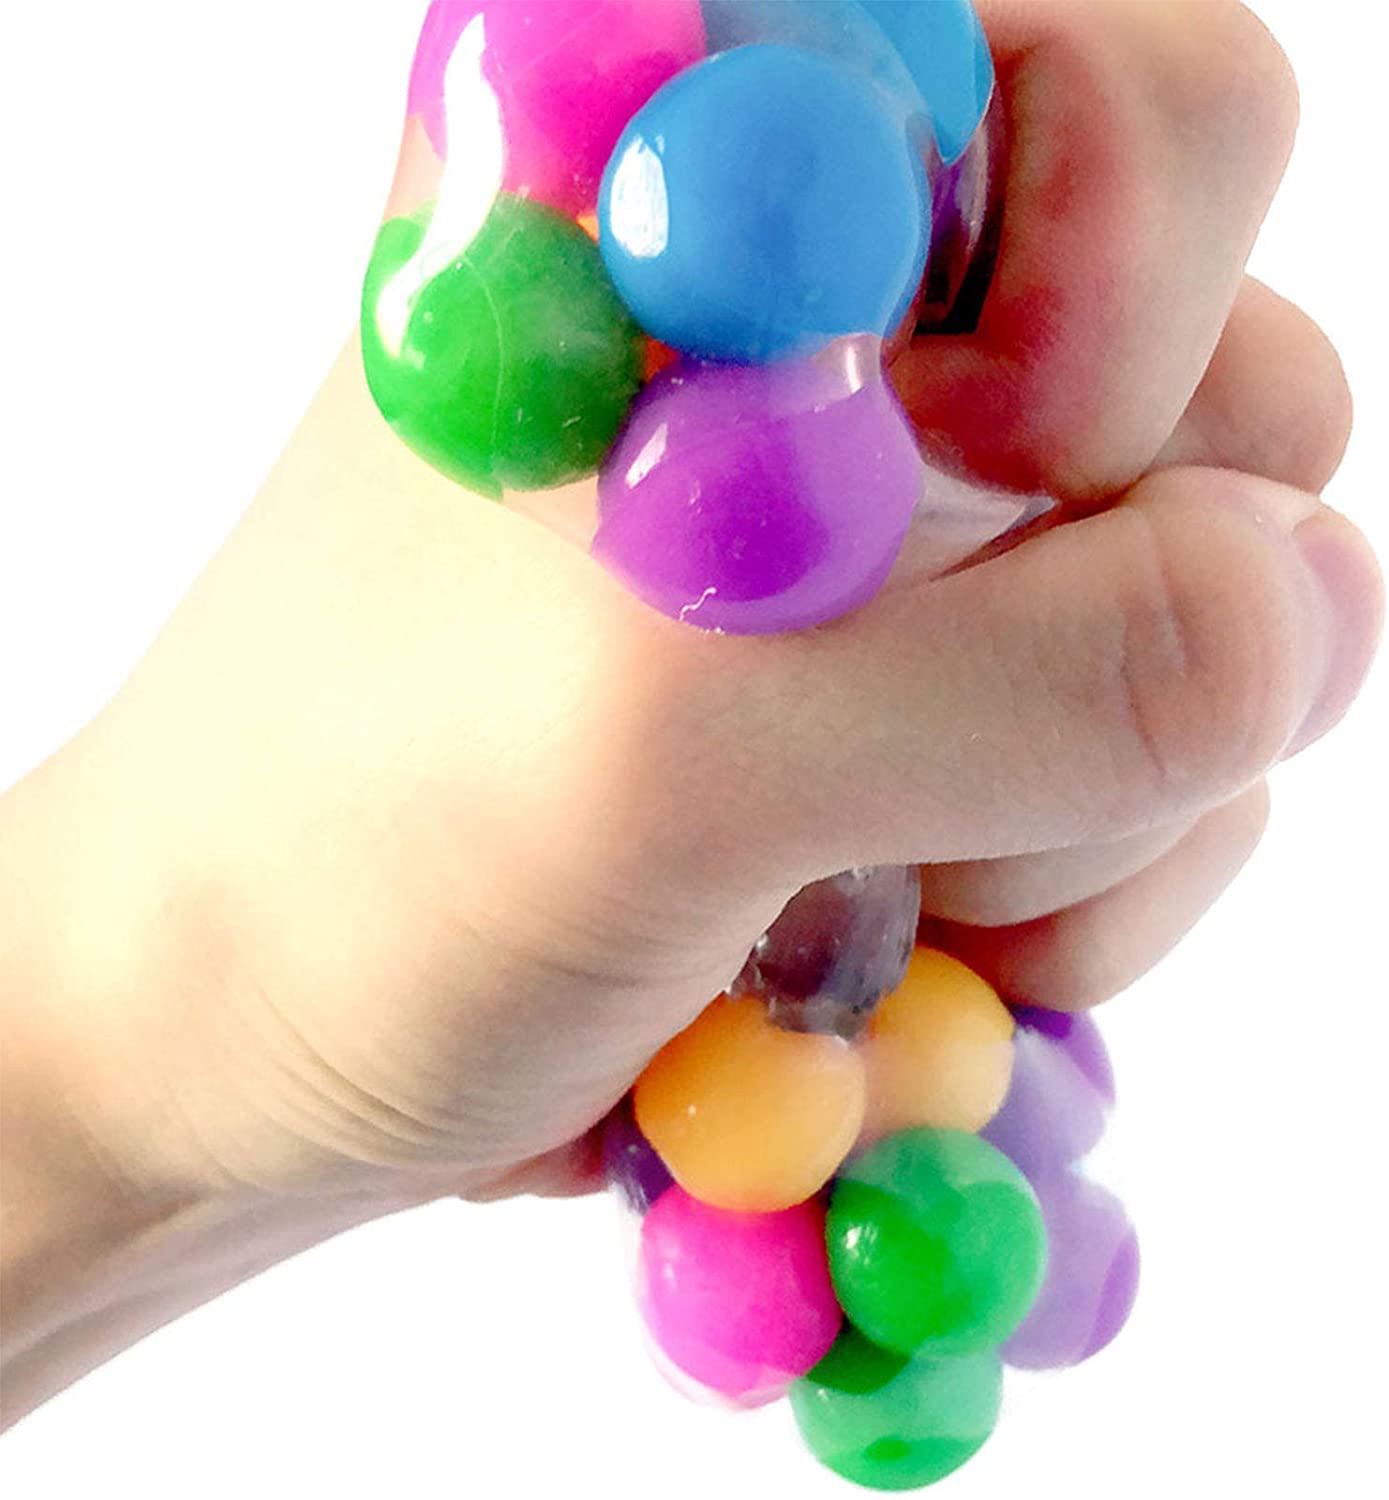 Animal Balloon Ball Autism ADHD Toy party favour Sensory Fiddle Fidget Stress